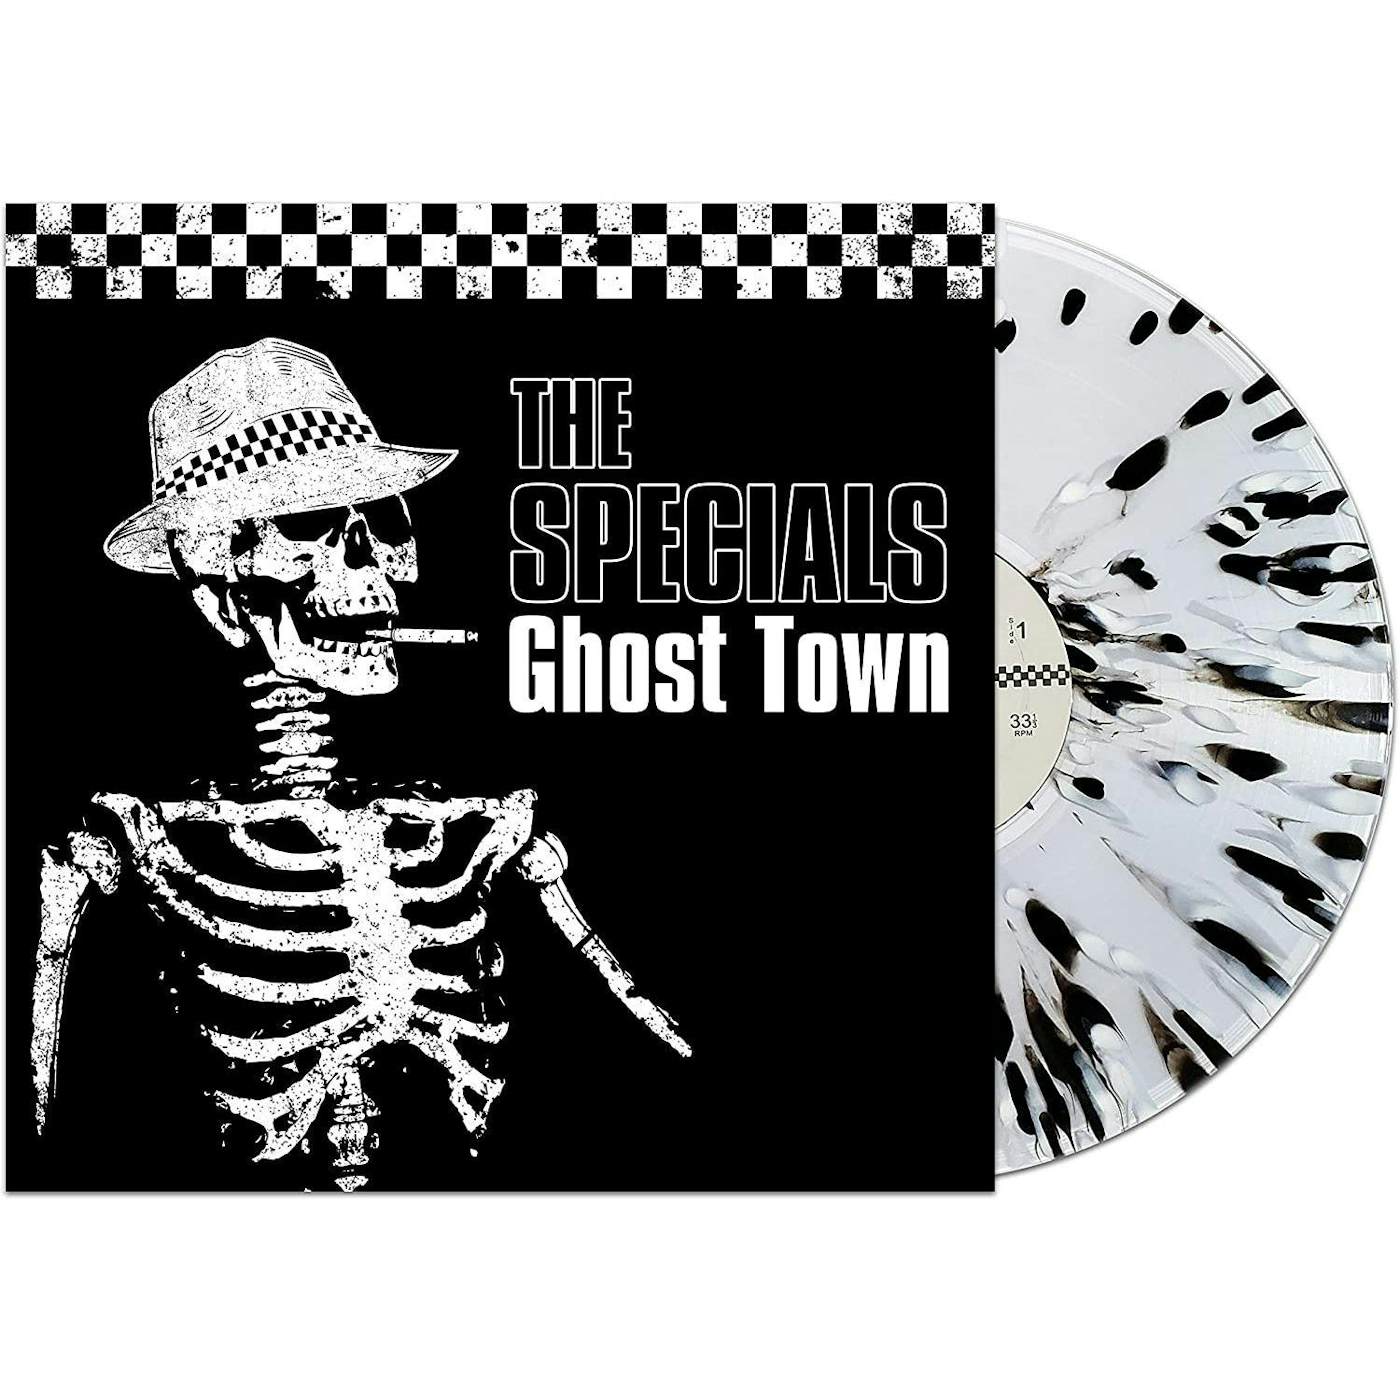 The Specials Ghost Town (Black/White Splatter) Vinyl Record